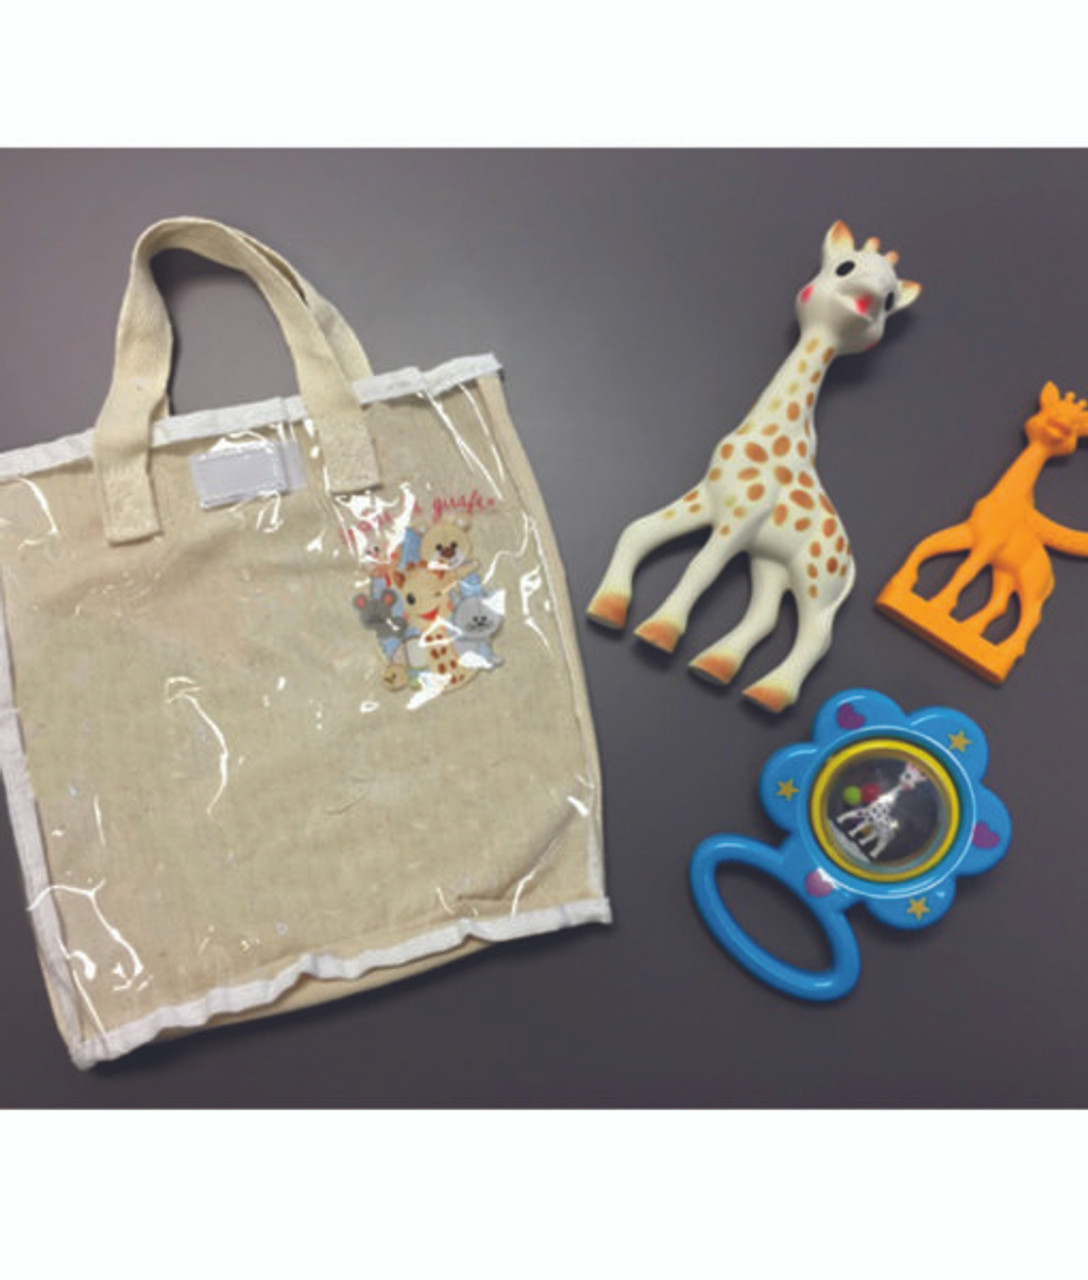 Sophie la girafe® and her bag